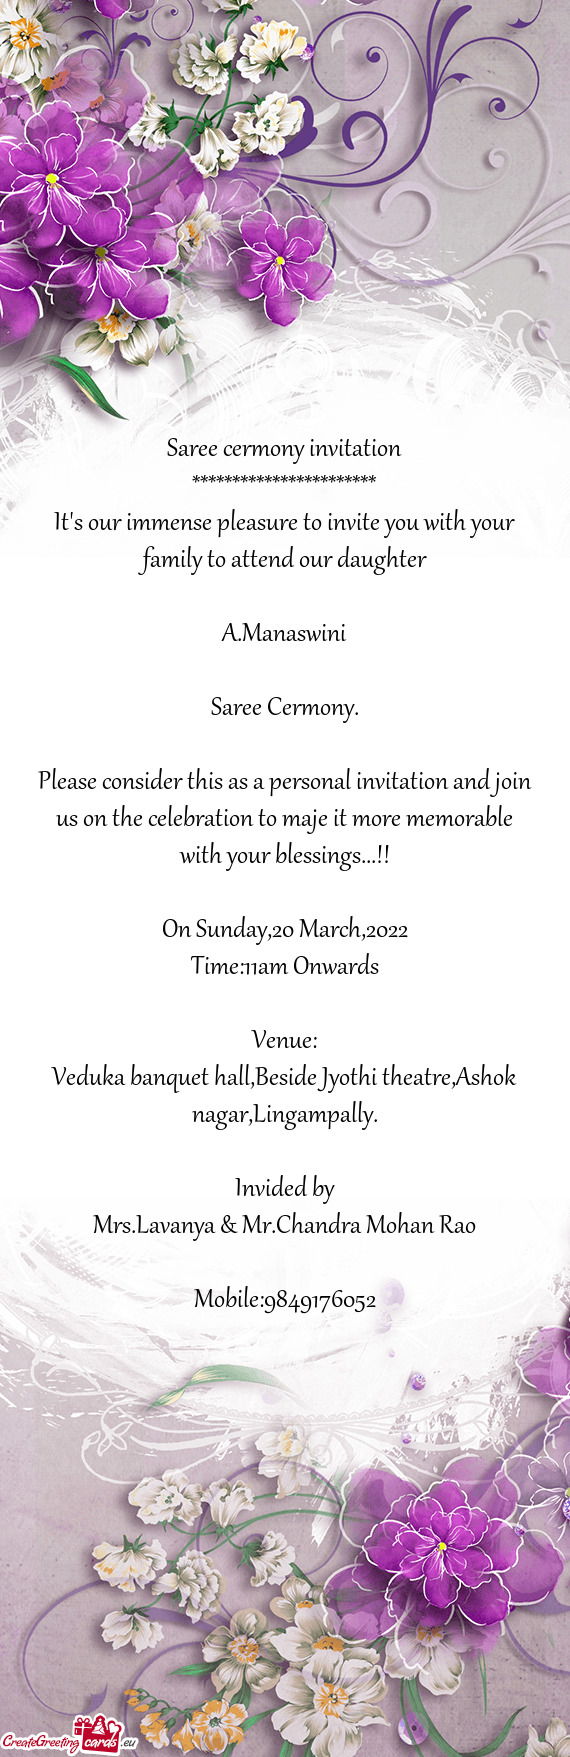 Saree cermony invitation